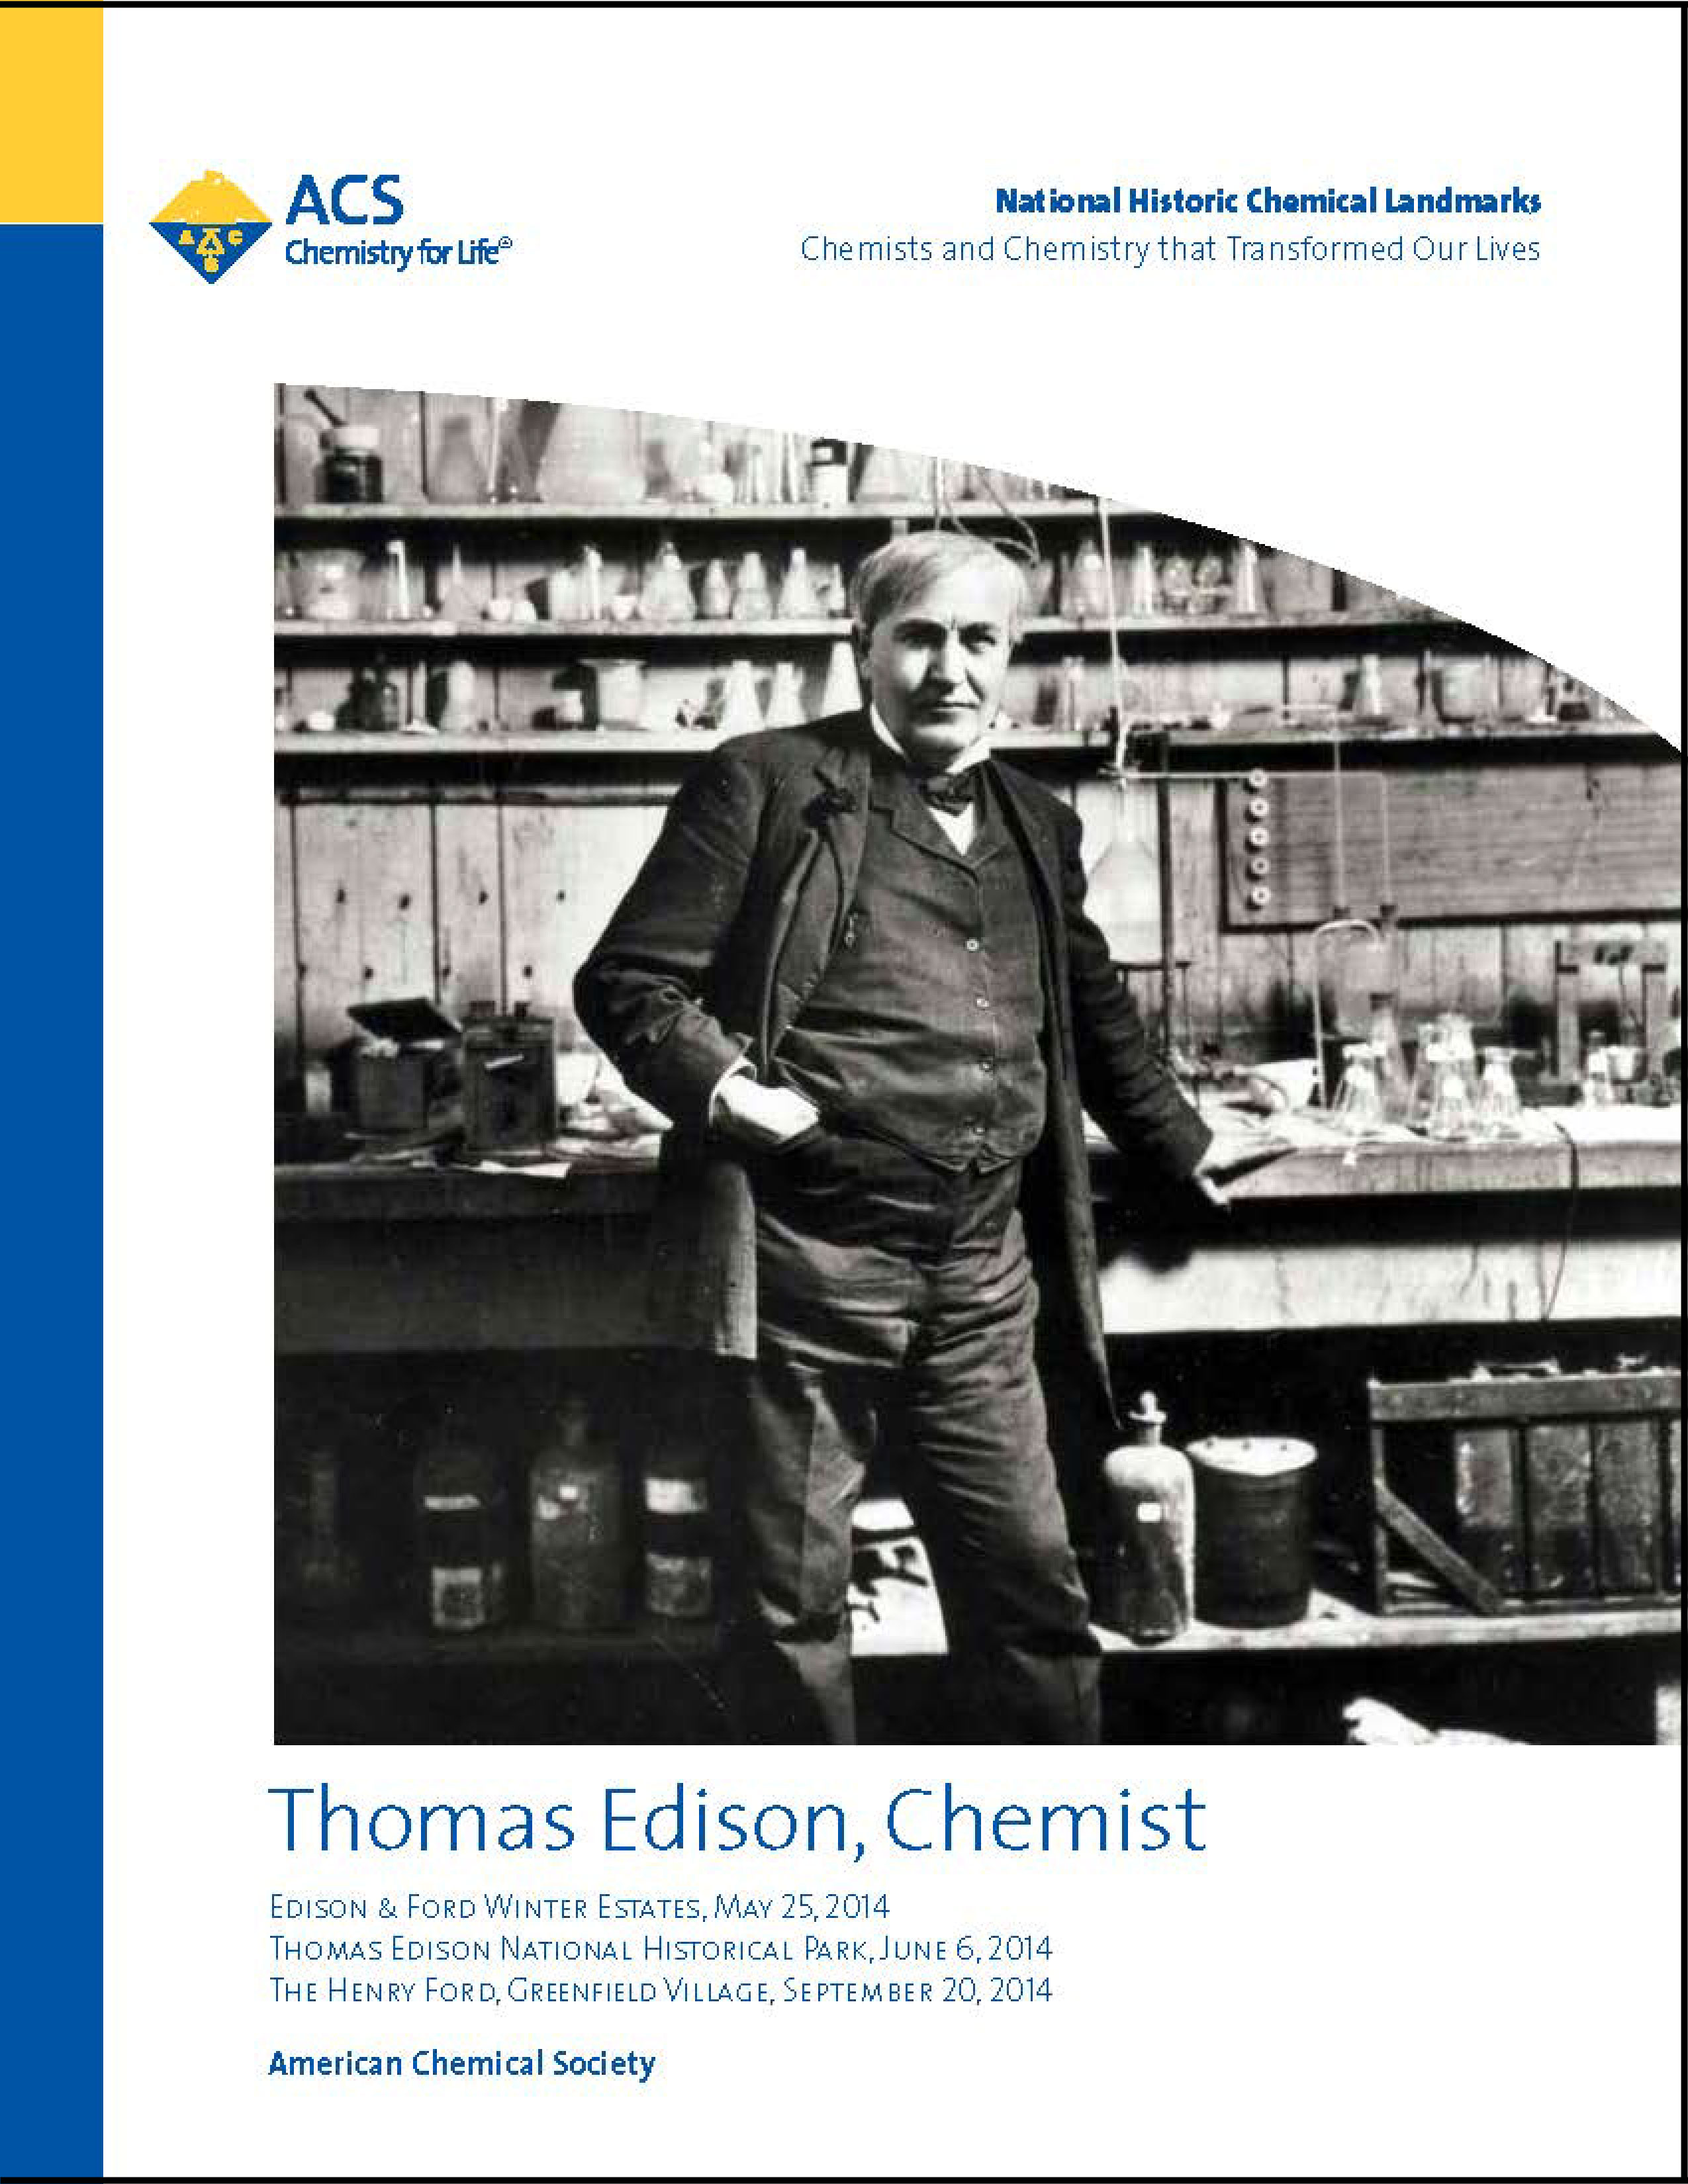 Thomas Edison, Chemist National Historic Chemical Landmark commemorative booklet